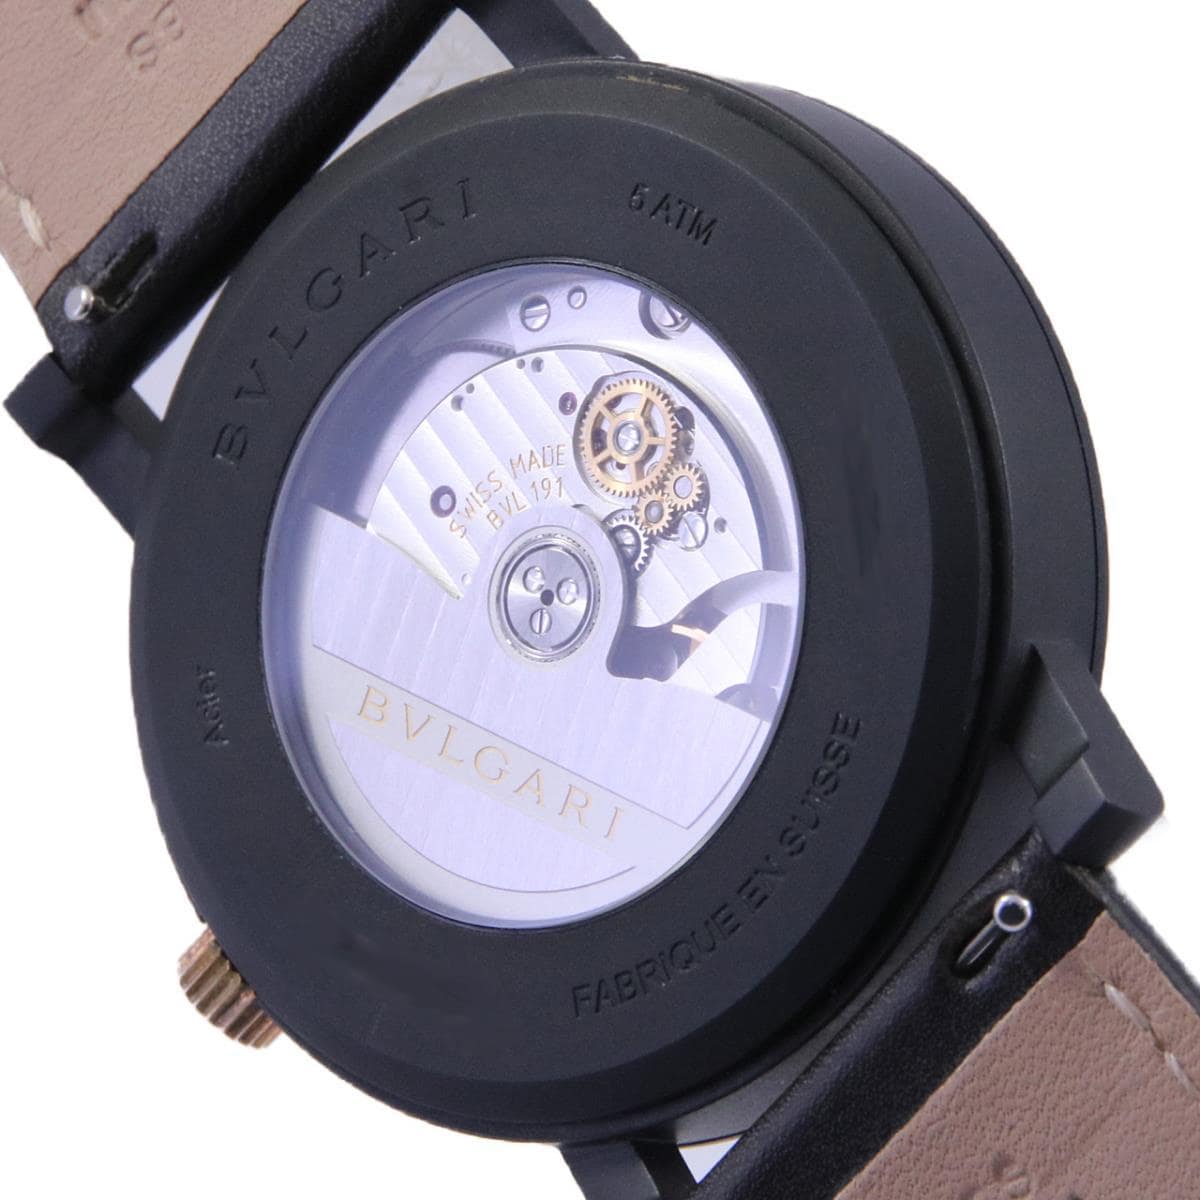 BVLGARI ブルガリブルガリBB41S 自動巻メンズ腕時計